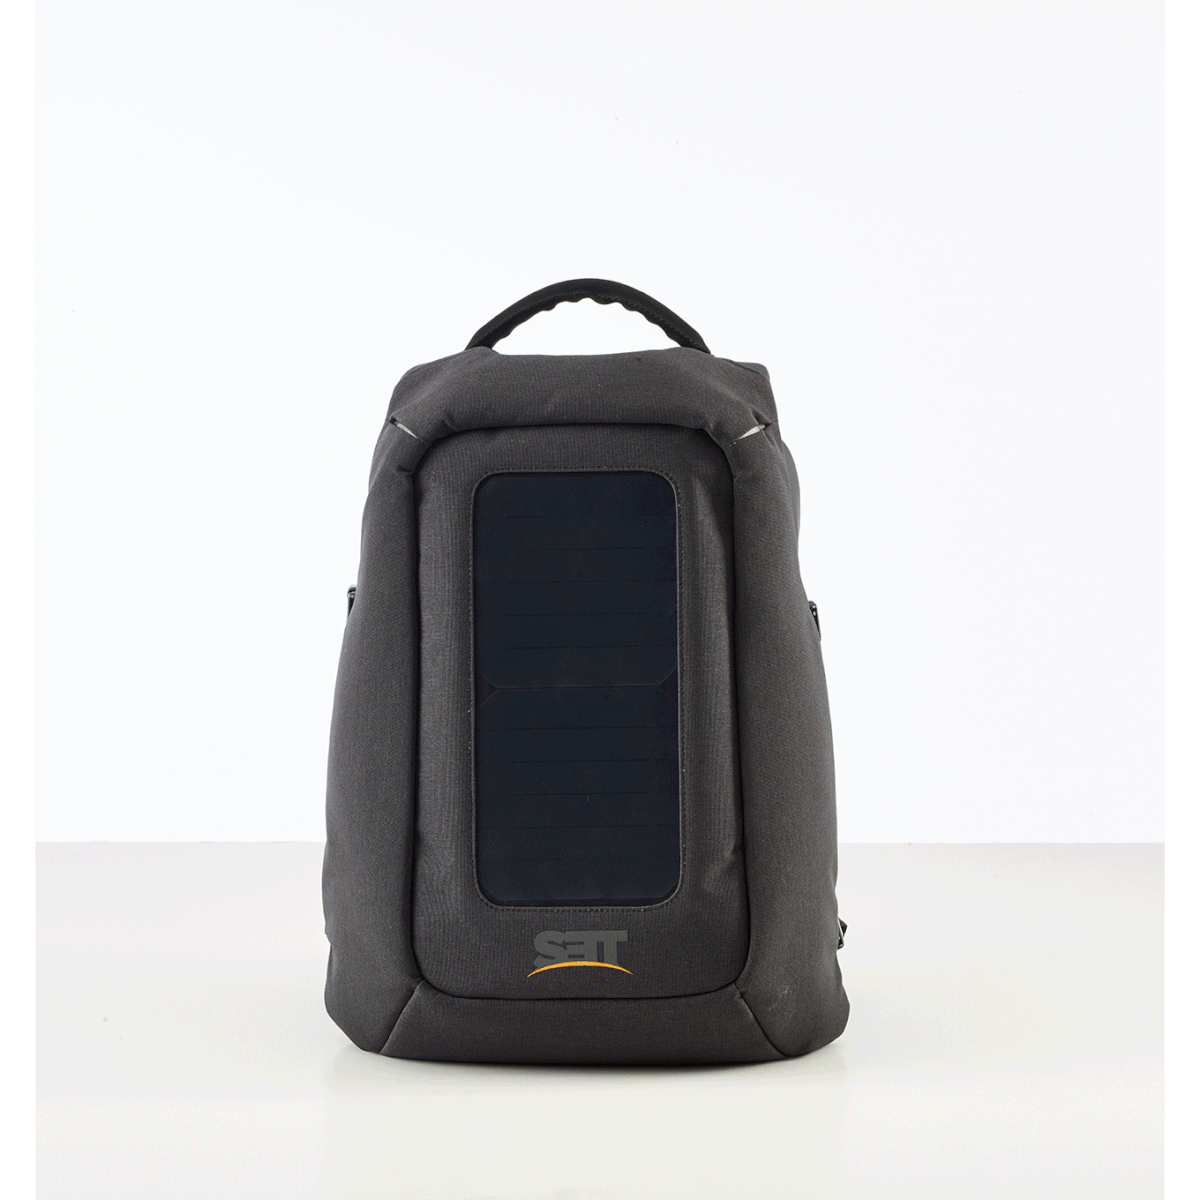 Adobe Portfolio backpack solar panel battery Travelling Backpack design